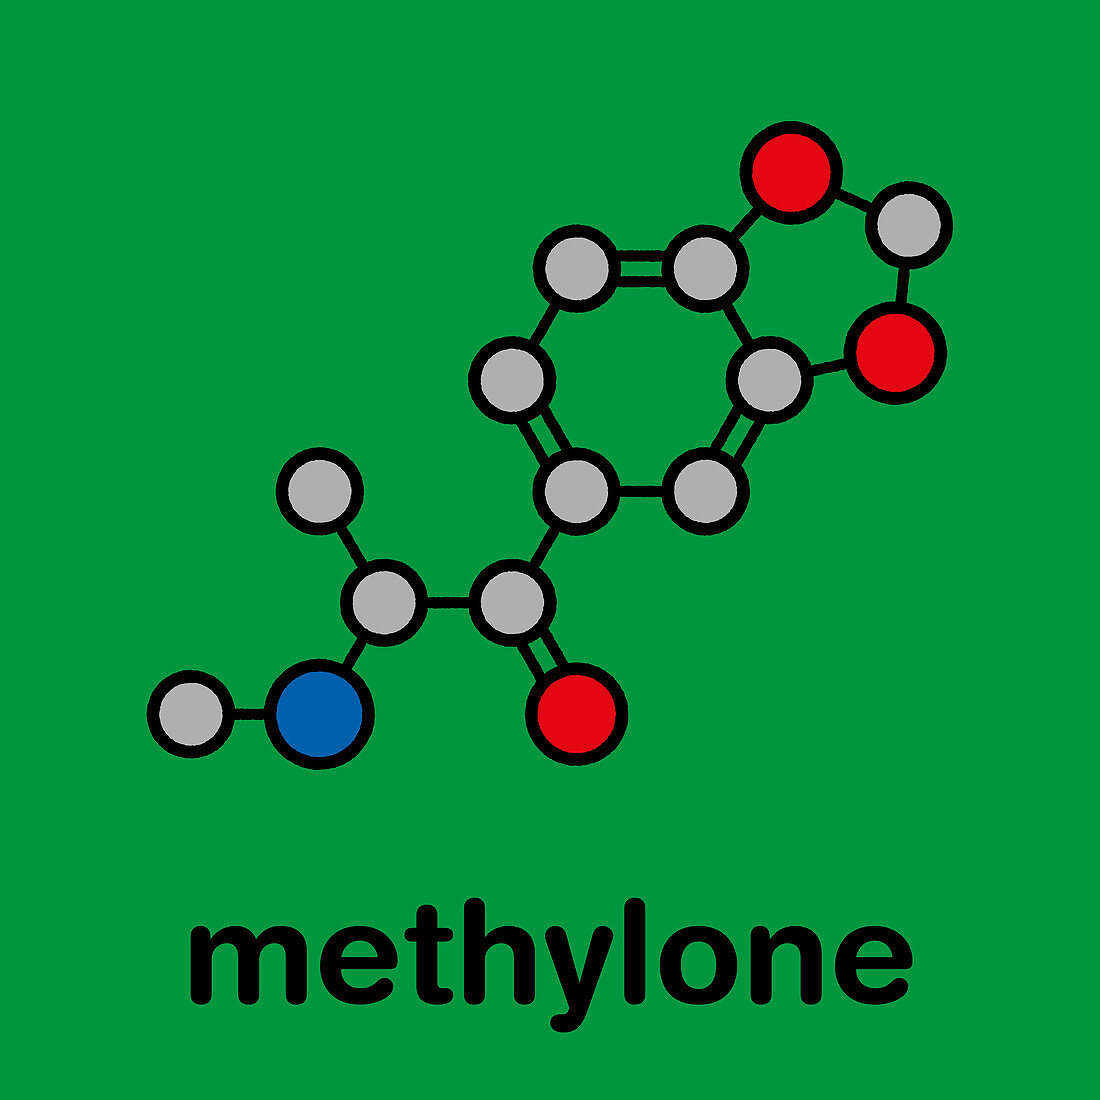 Methylone stimulant molecule, illustration